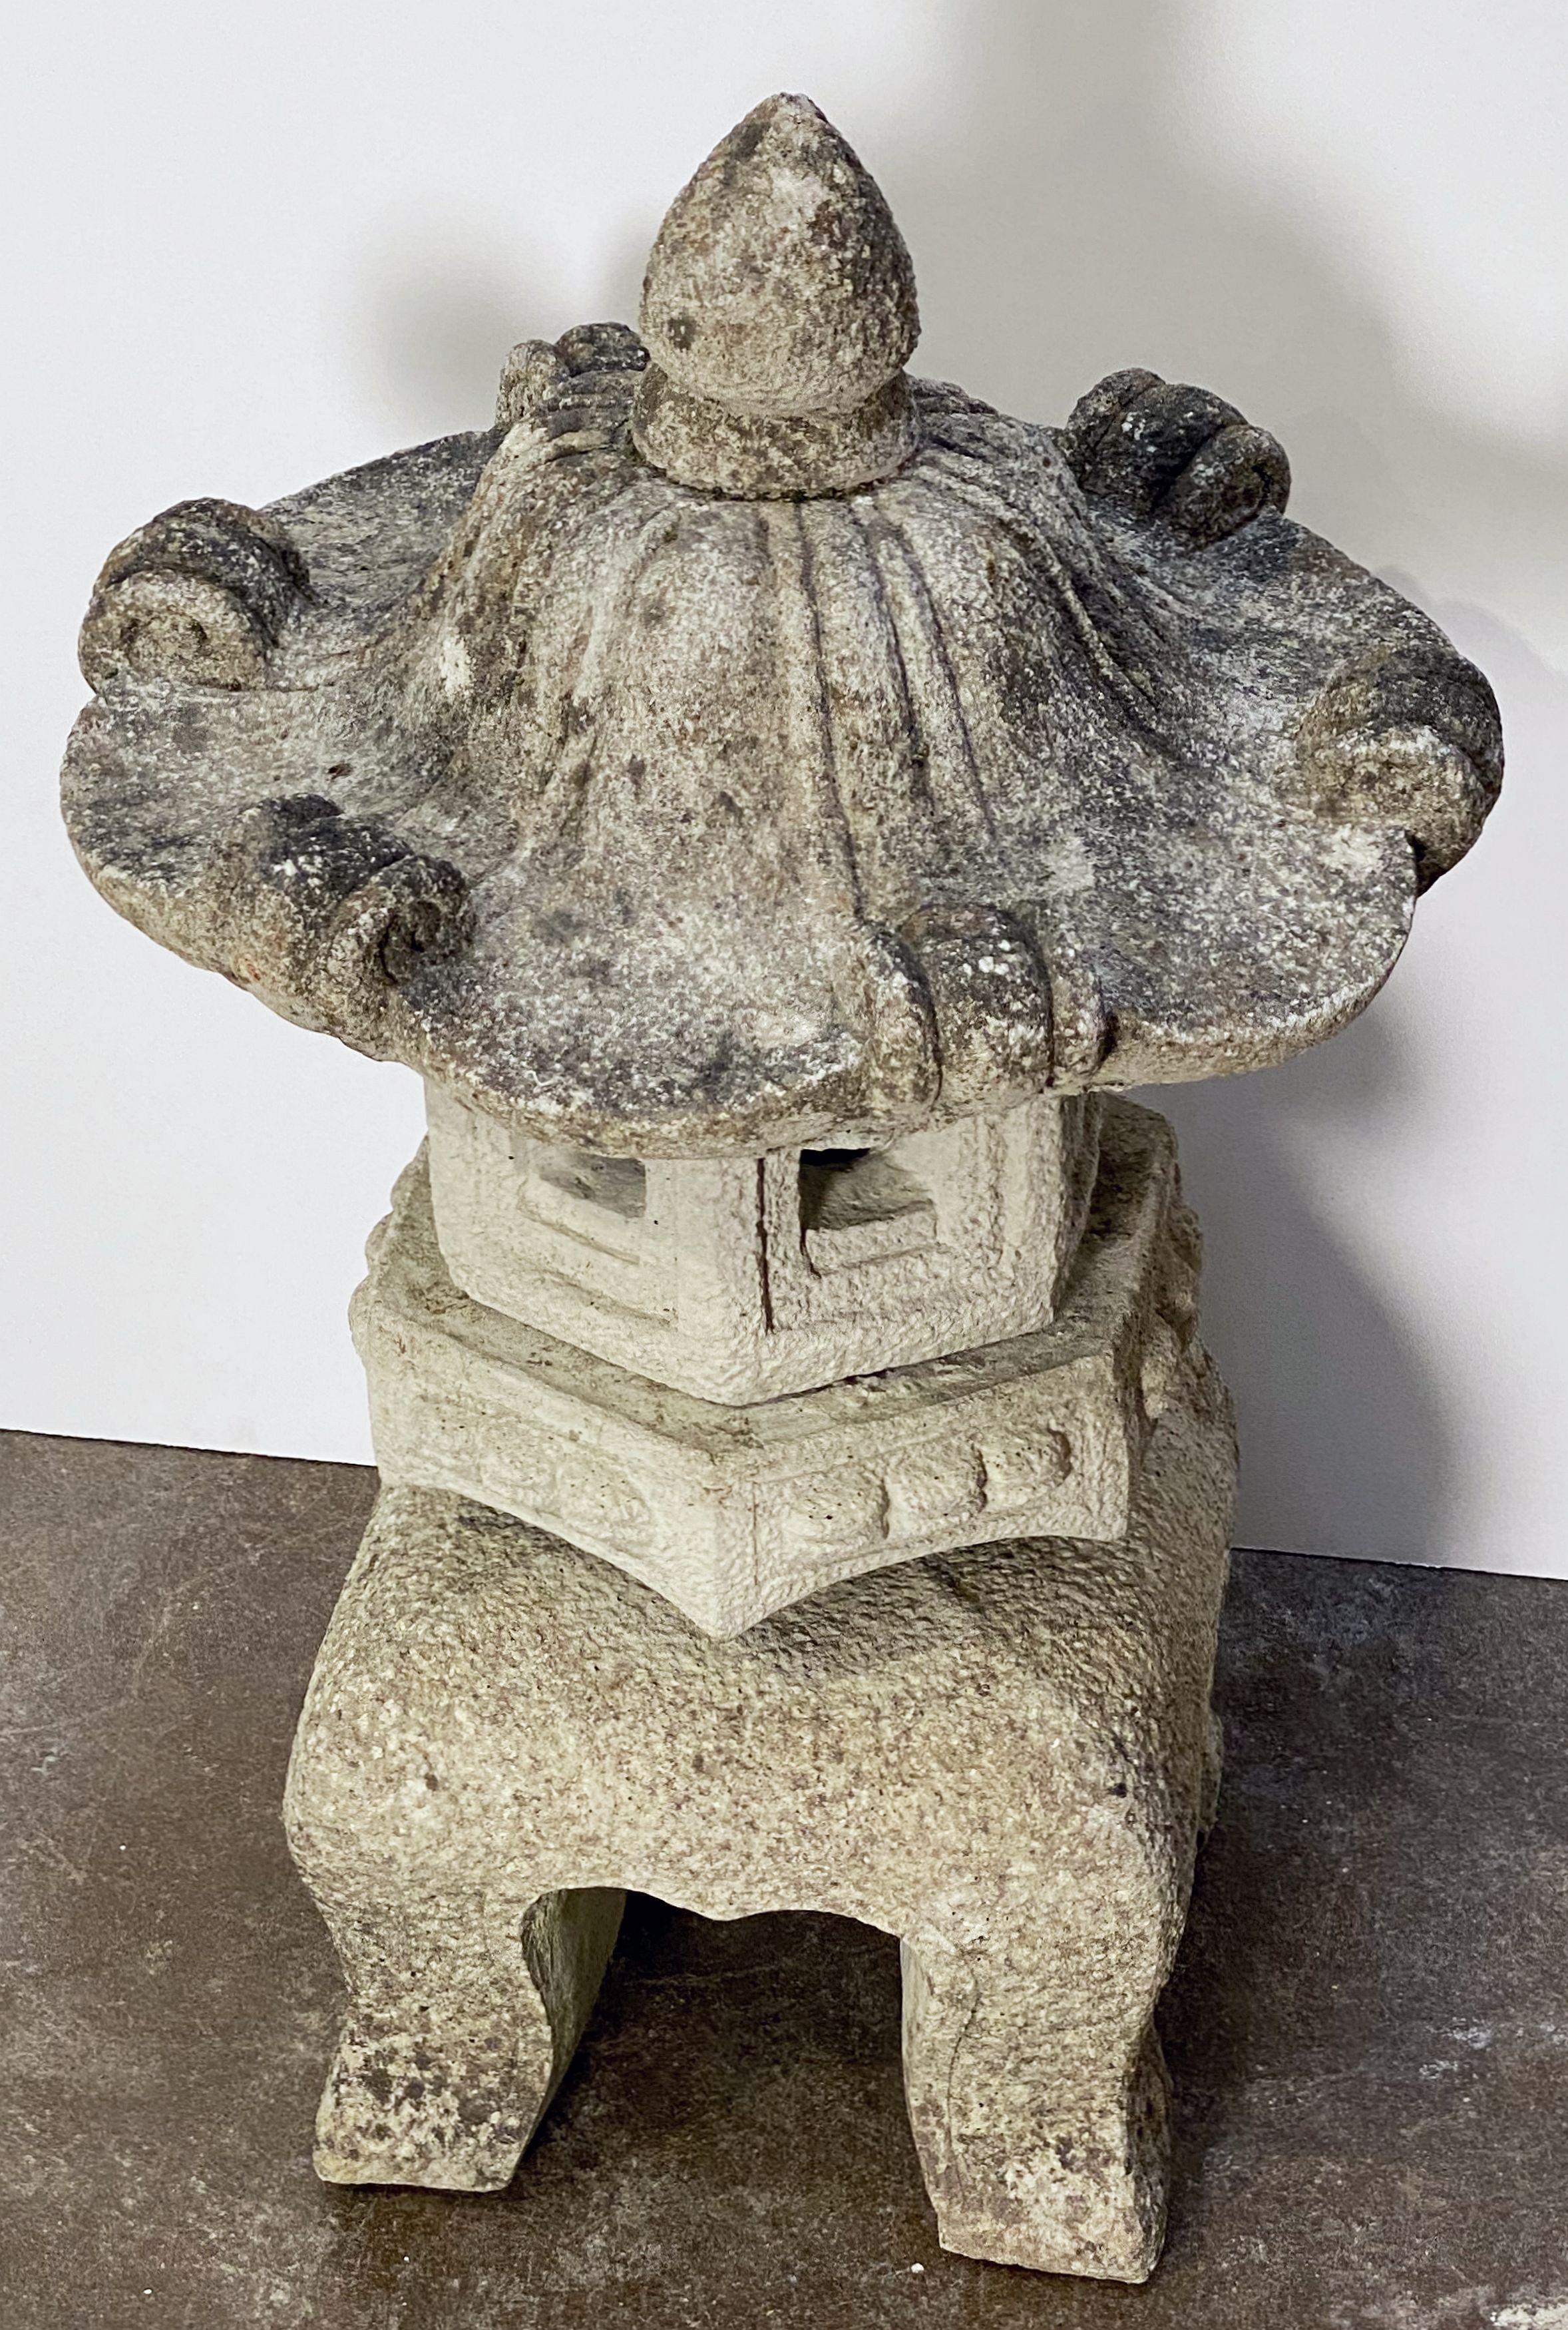 English Kasuga Stone Garden Ornamental Lantern from England